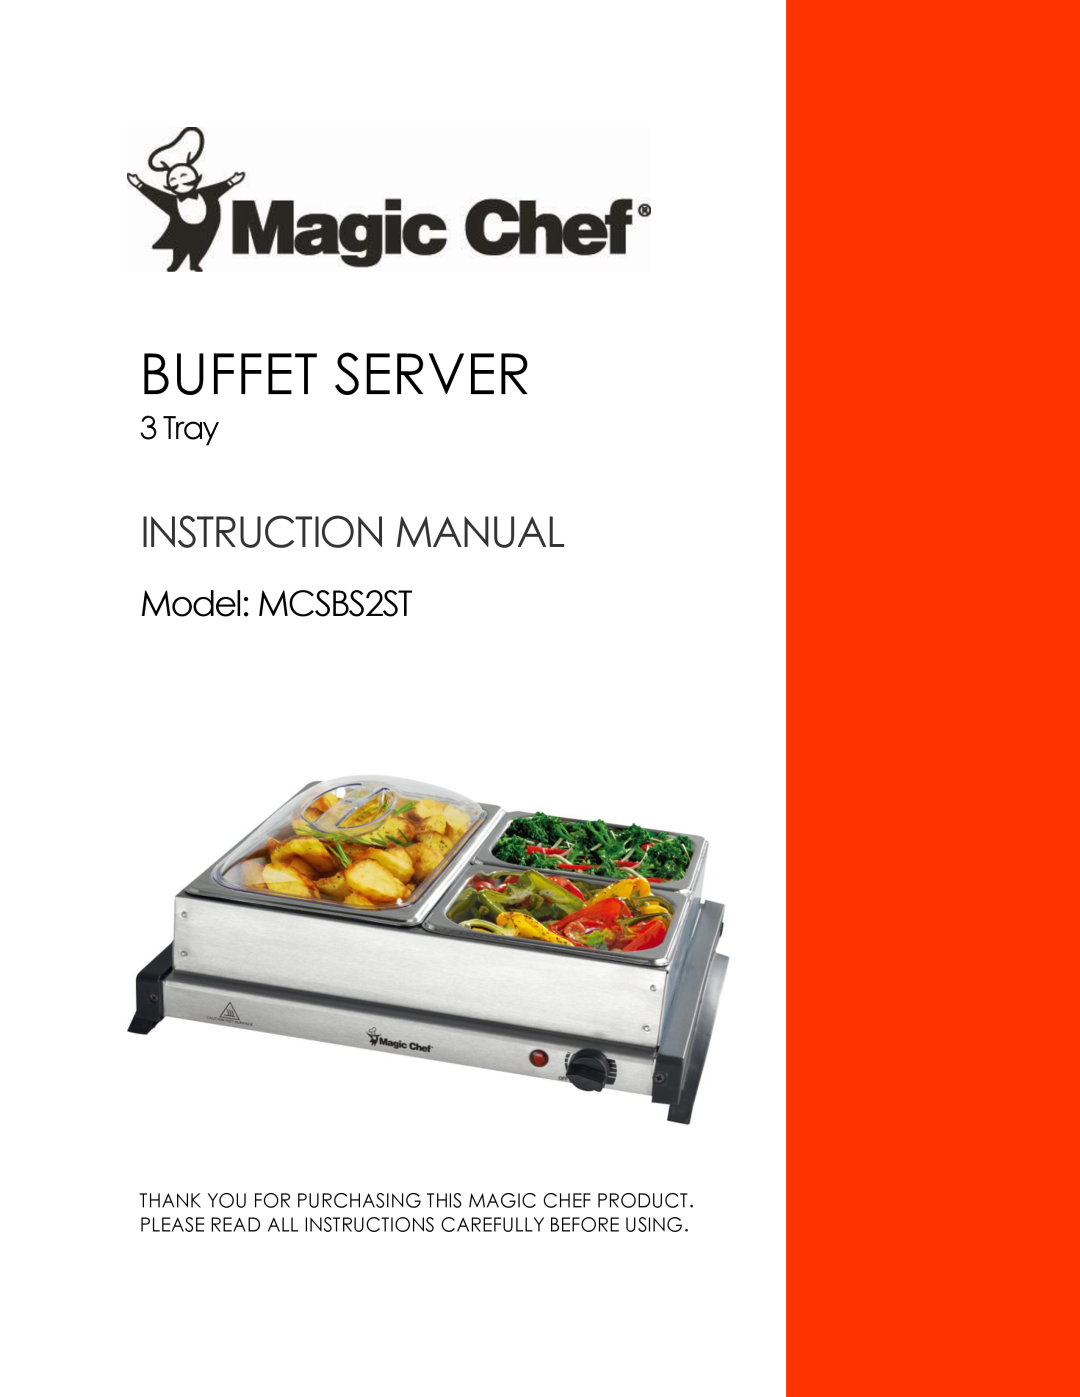 Magic Chef instruction manual Buffet Server, Model MCSBS2ST, Tray 